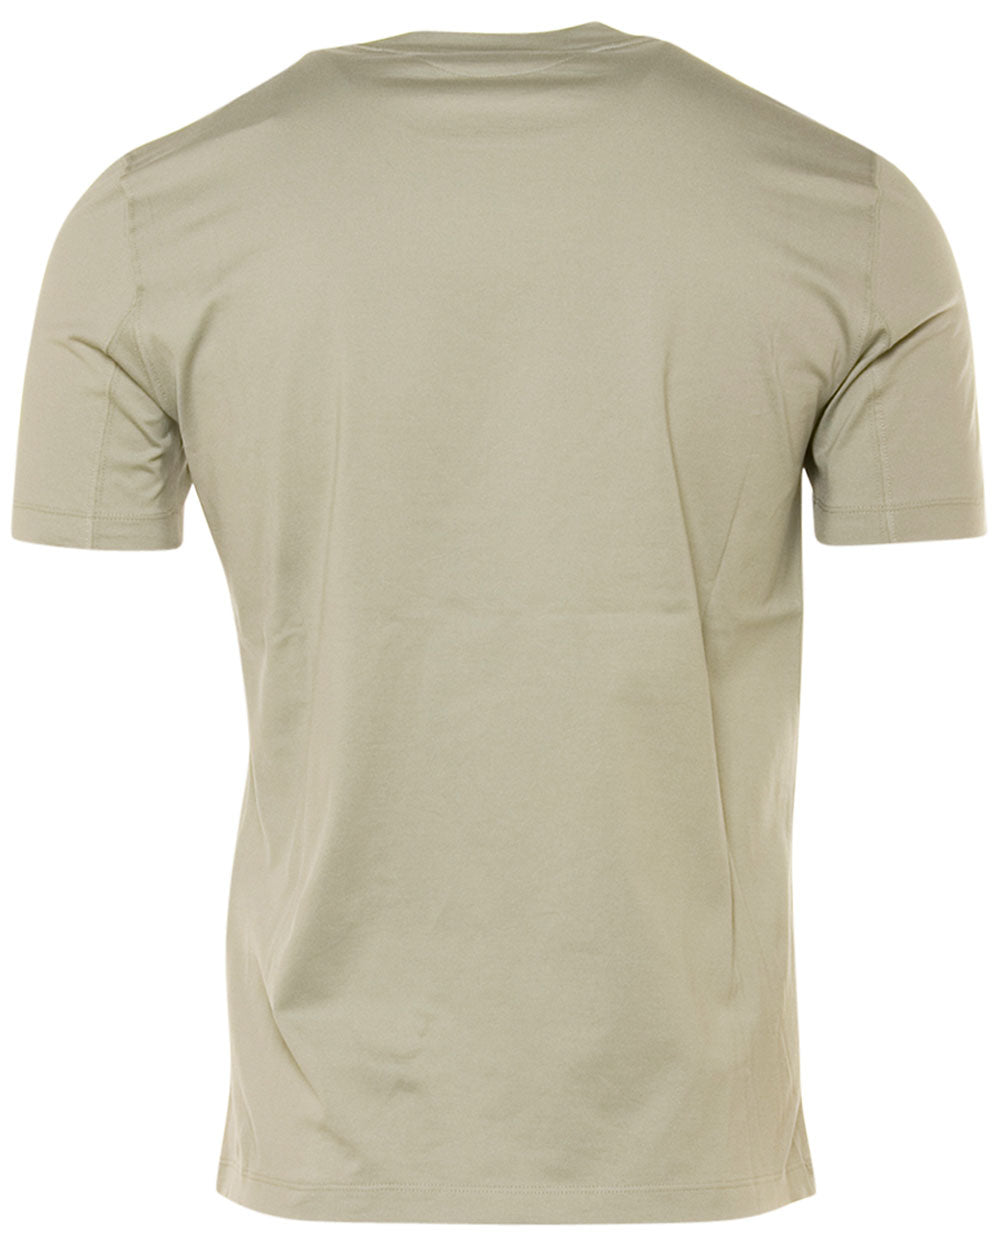 Aloe Short Sleeve T-Shirt